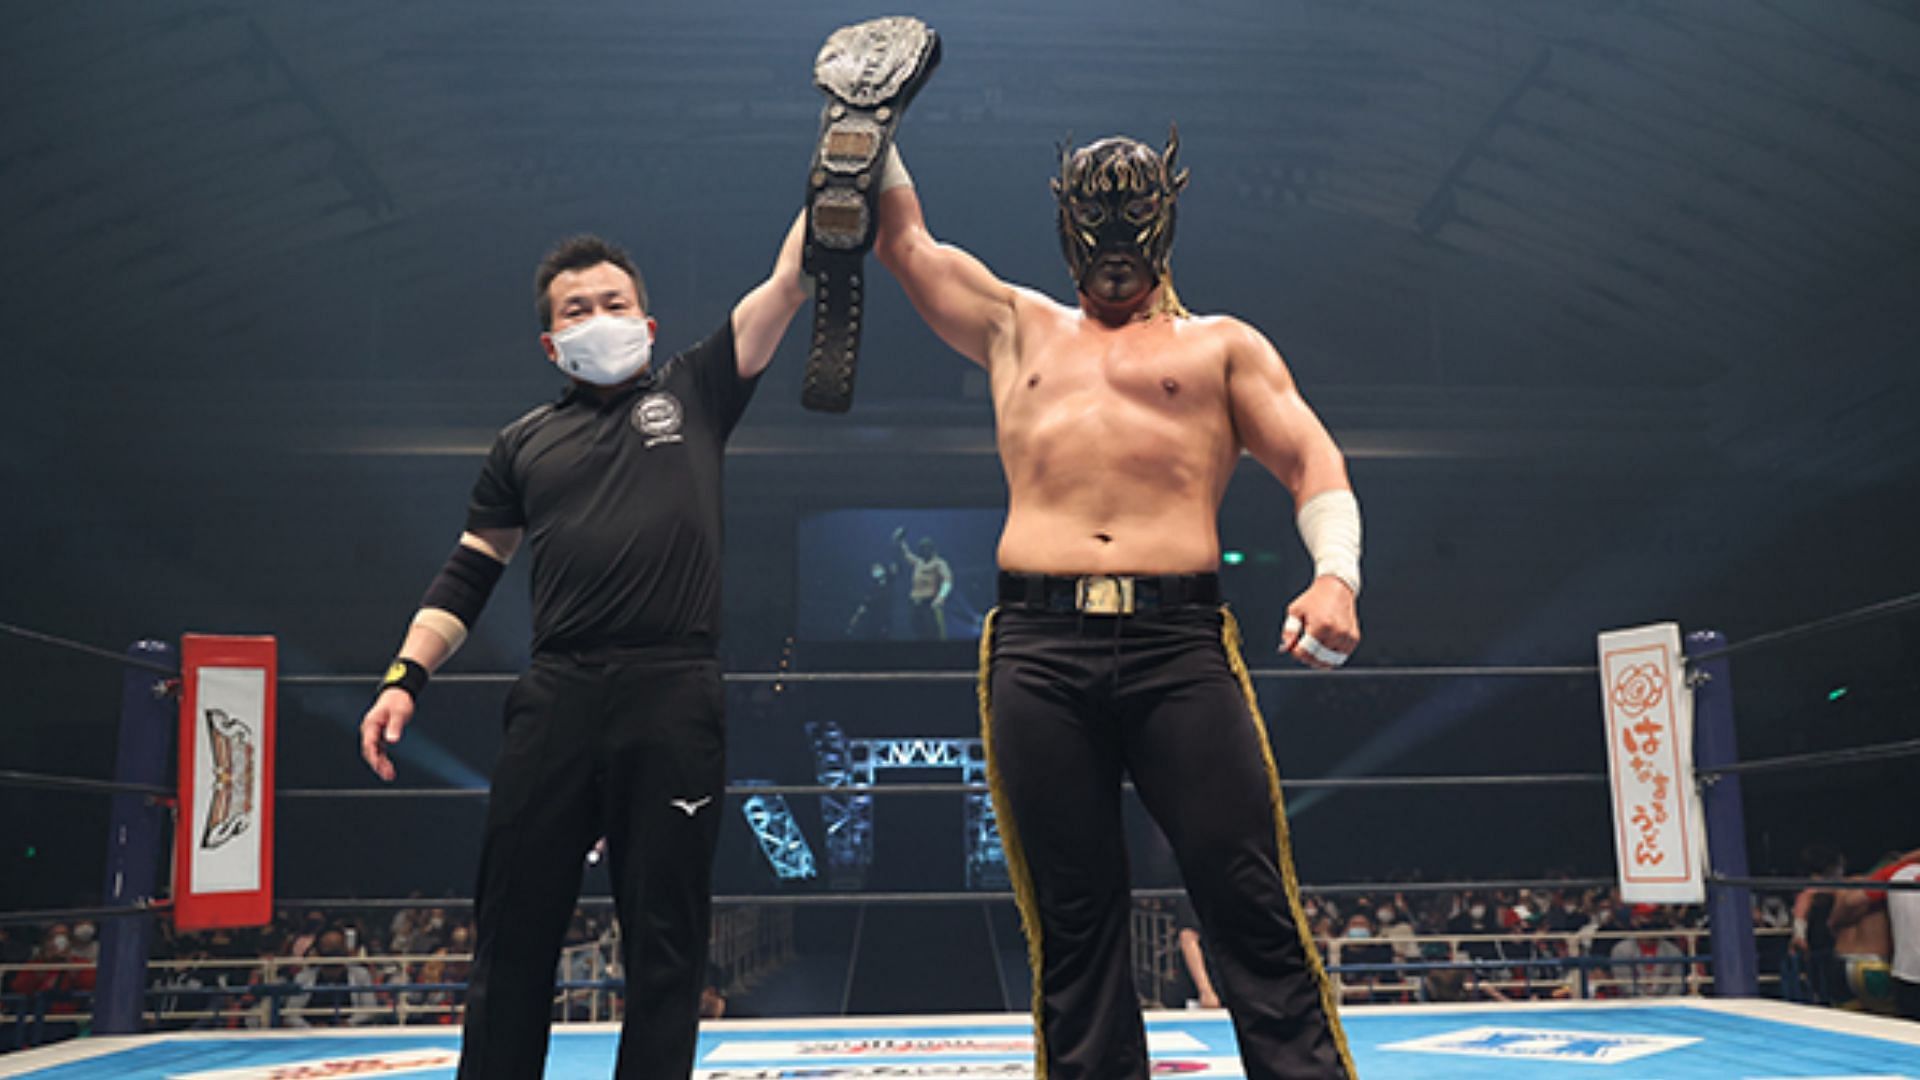 El Desperado won the IWGP Jr. Heavyweight Championship at NJPW Power Struggle